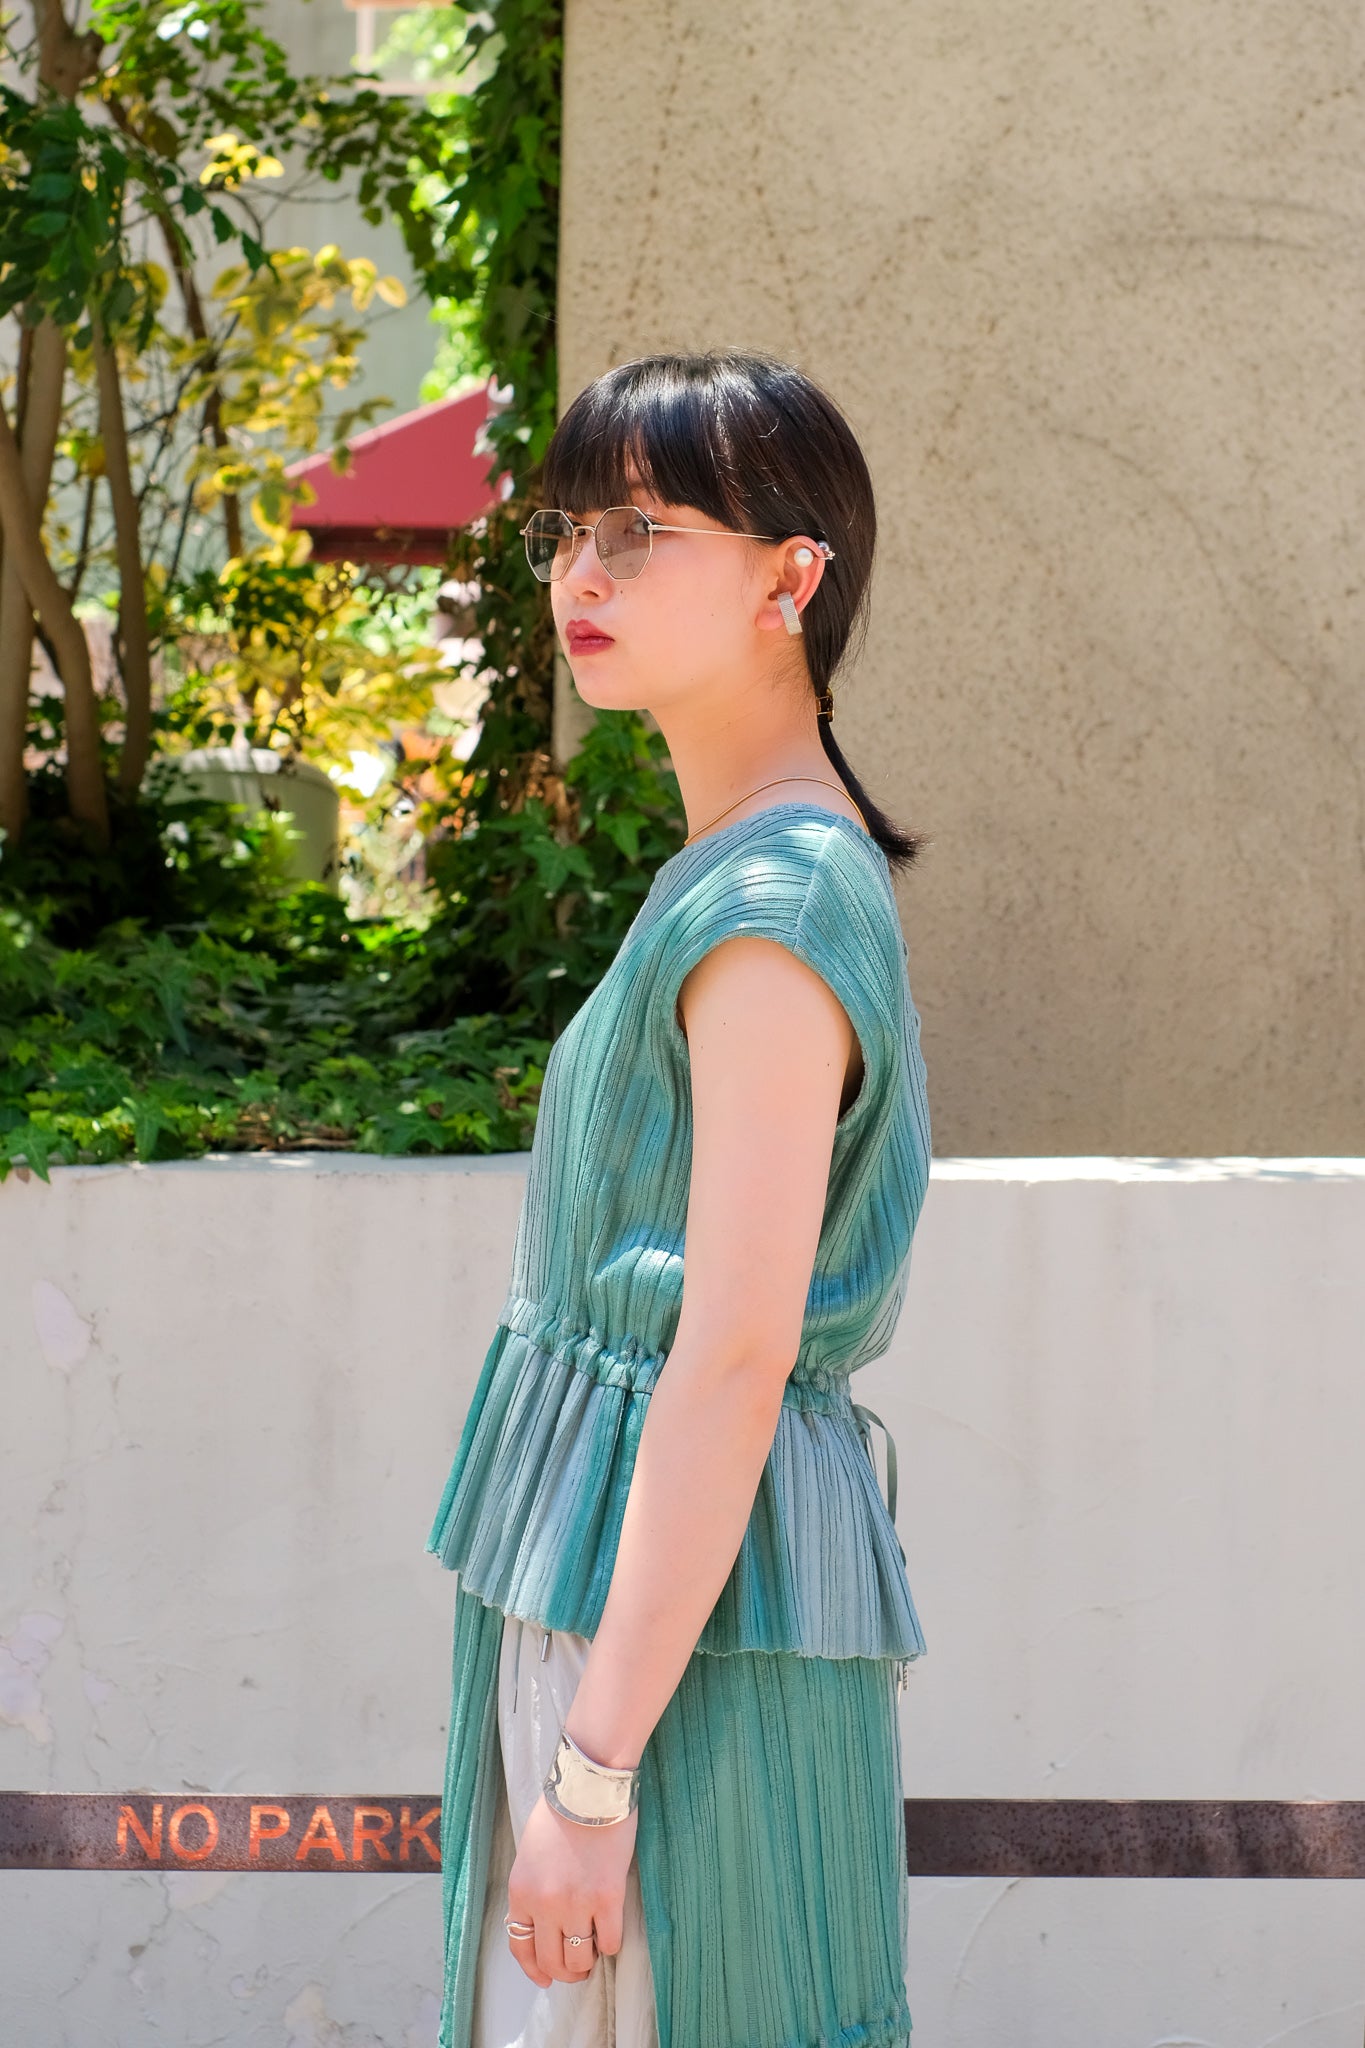 tiit tokyo의 gradation knit top과 gradation knit skirt를 사용한 스타일링 이미지